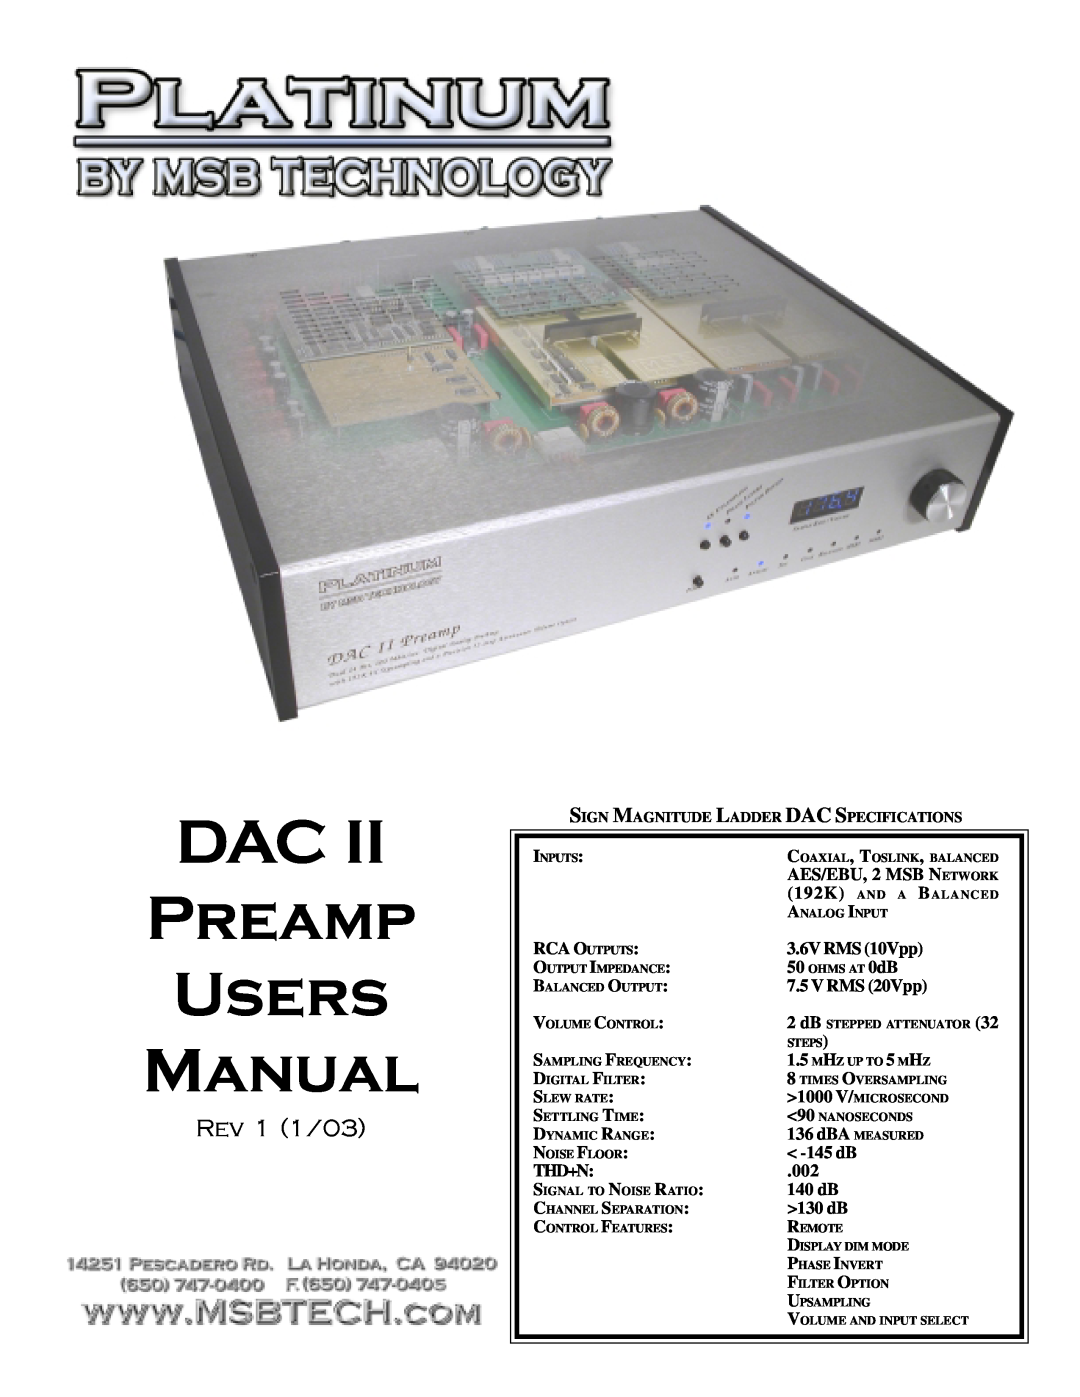 MSB Technology DAC II user manual Rev 1 1/03 